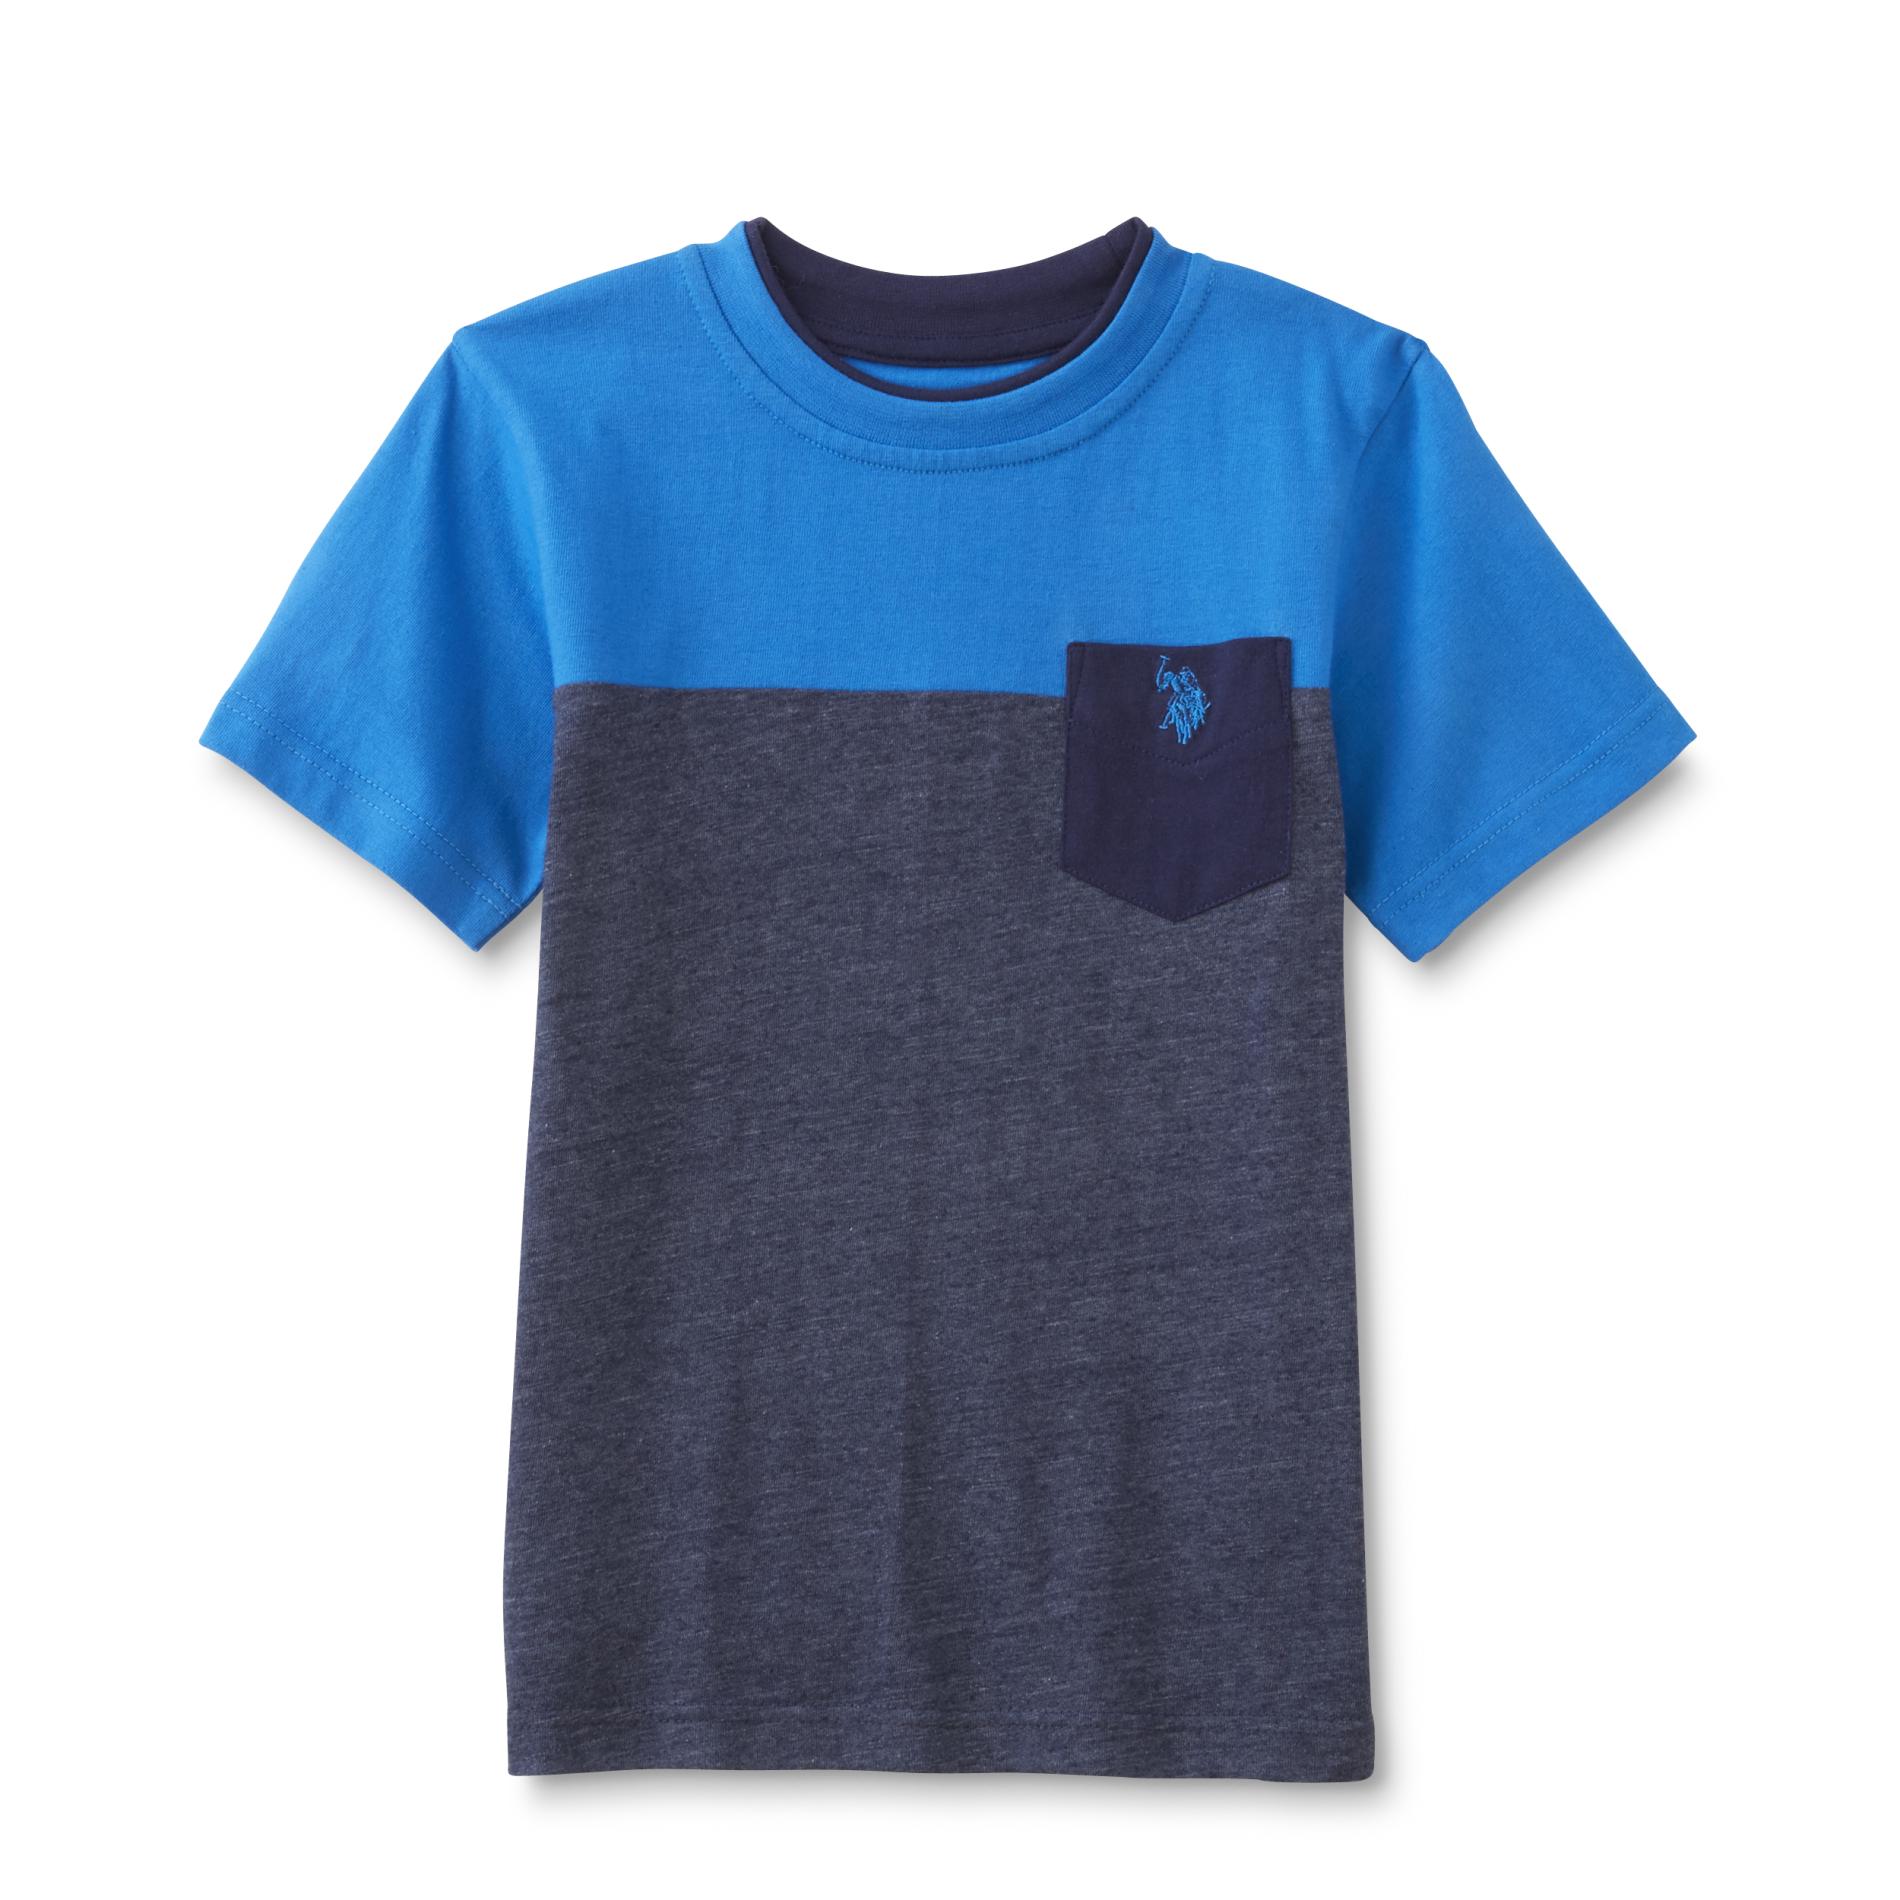 U.S. Polo Assn. Boy's Pocket T-Shirt - Colorblock